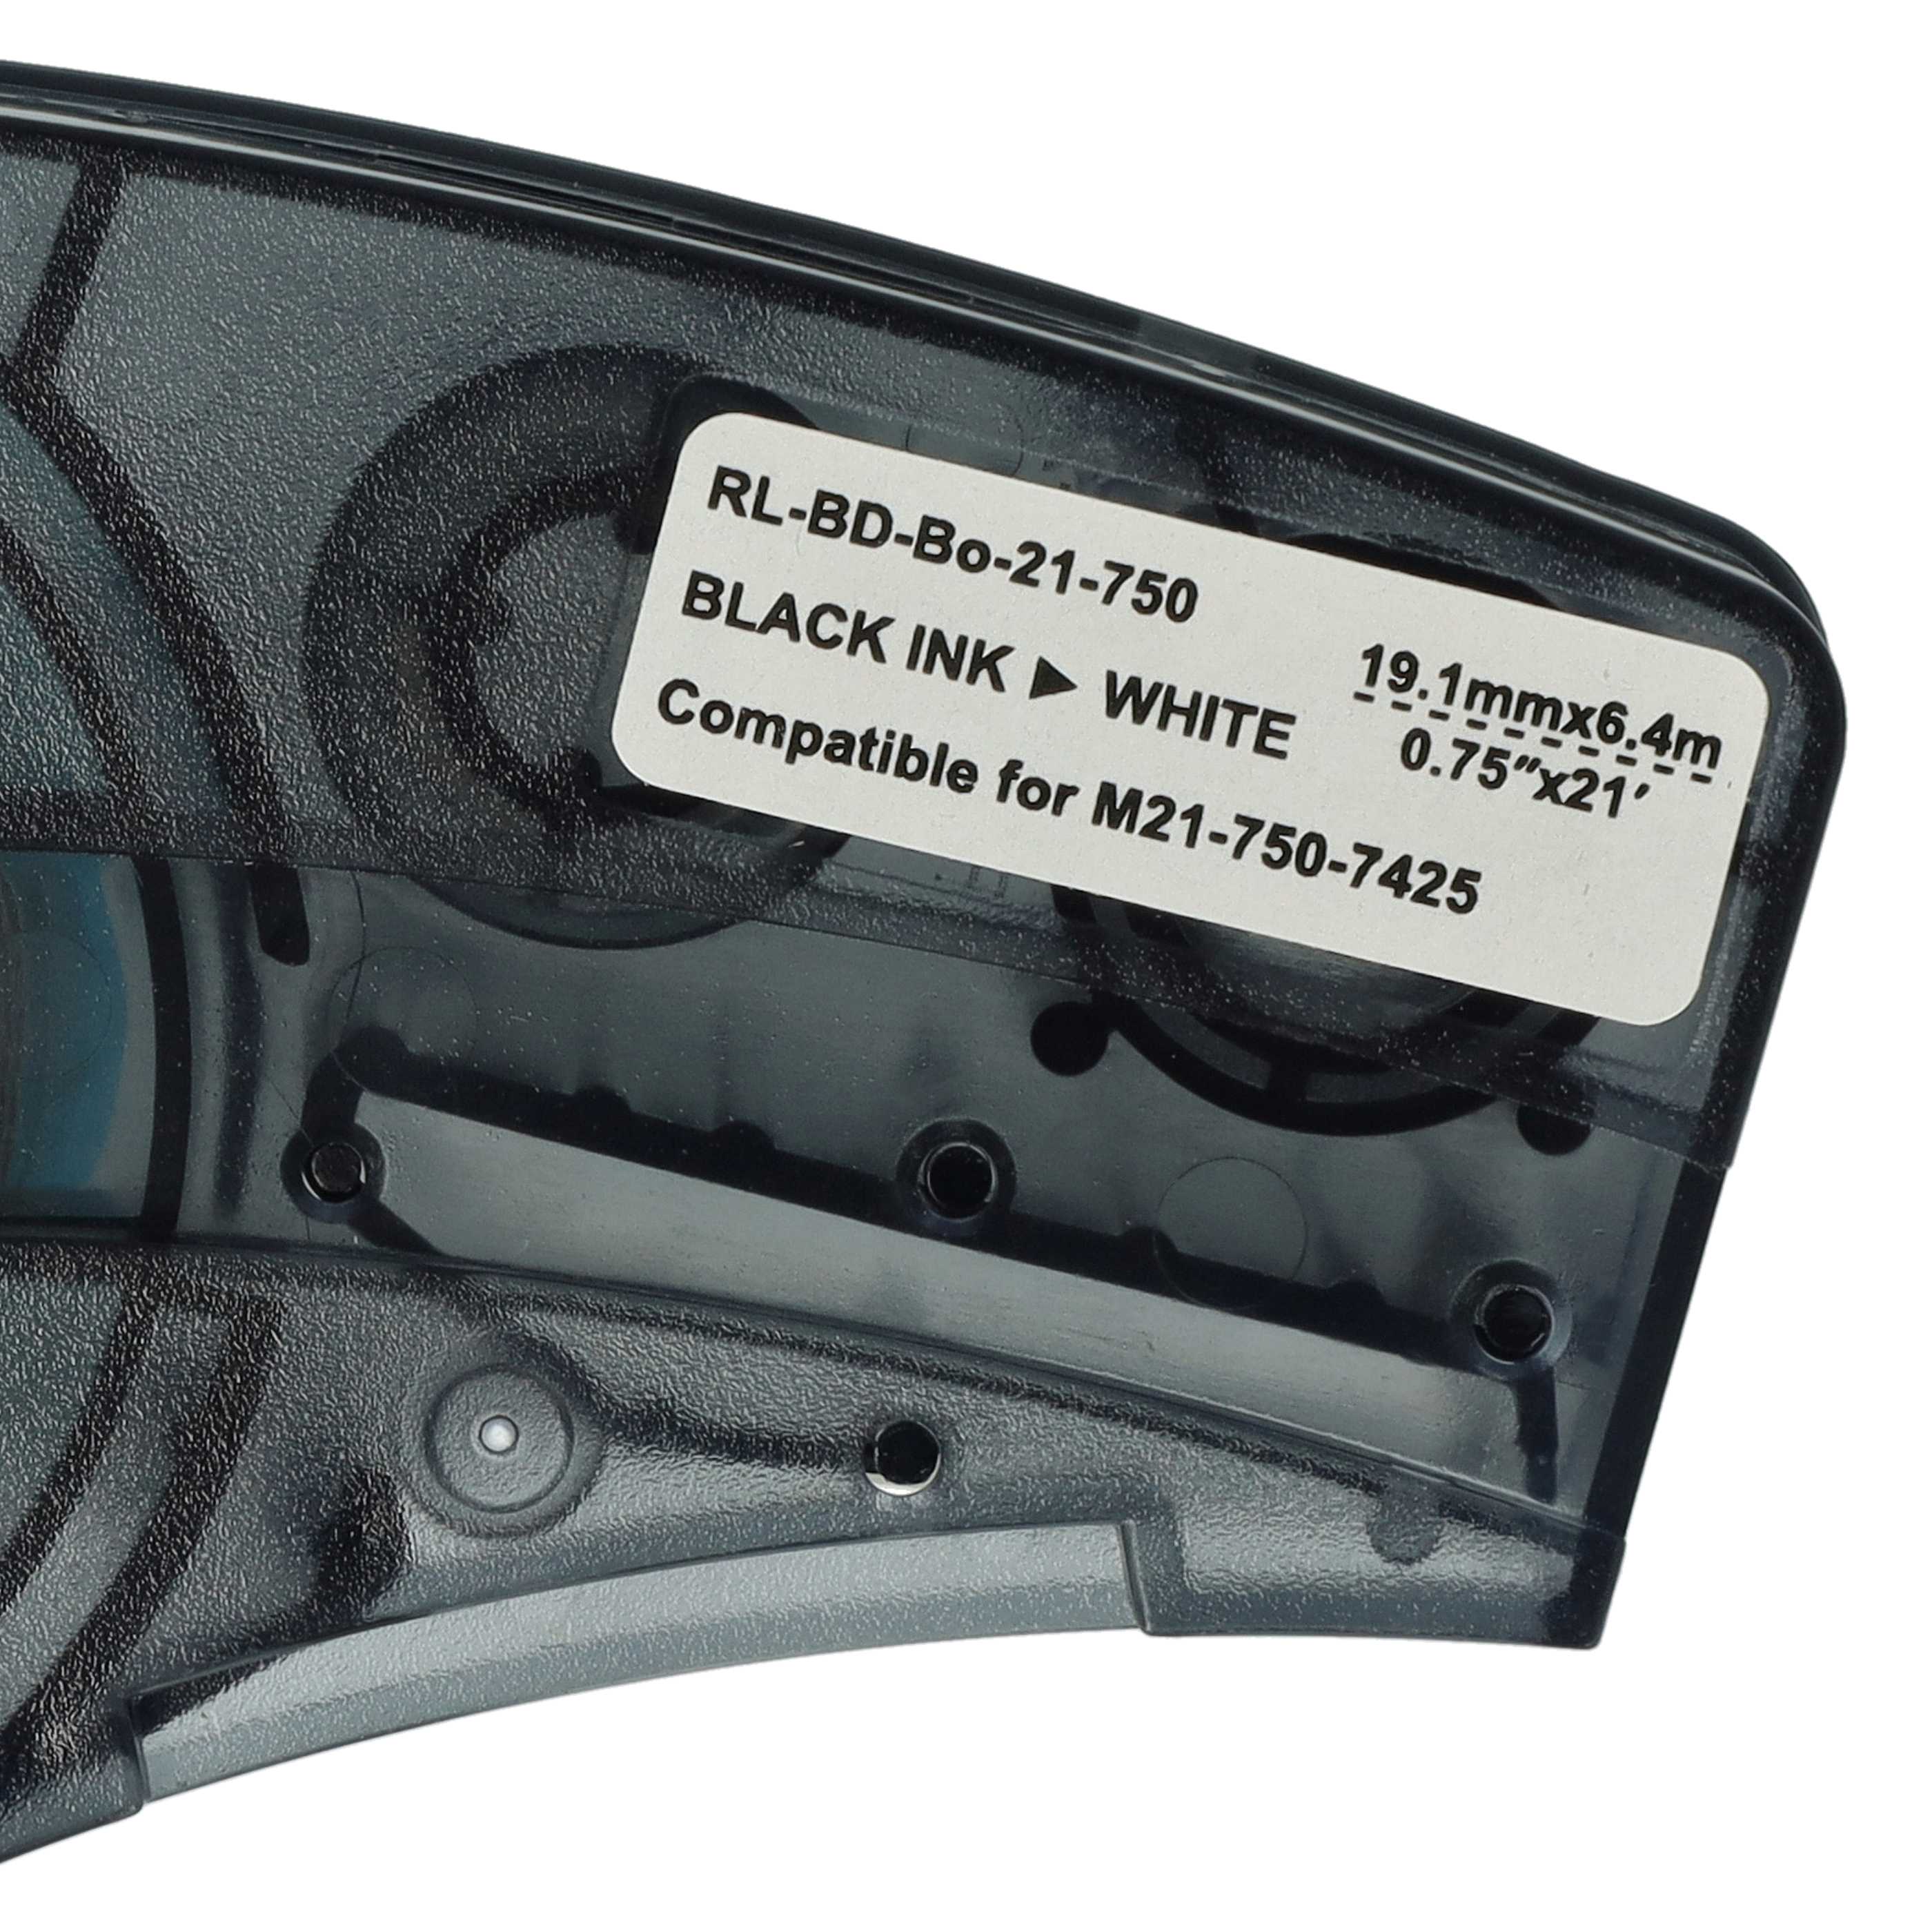 5x Casete cinta escritura reemplaza Brady M21-750-7425 Negro su Blanco